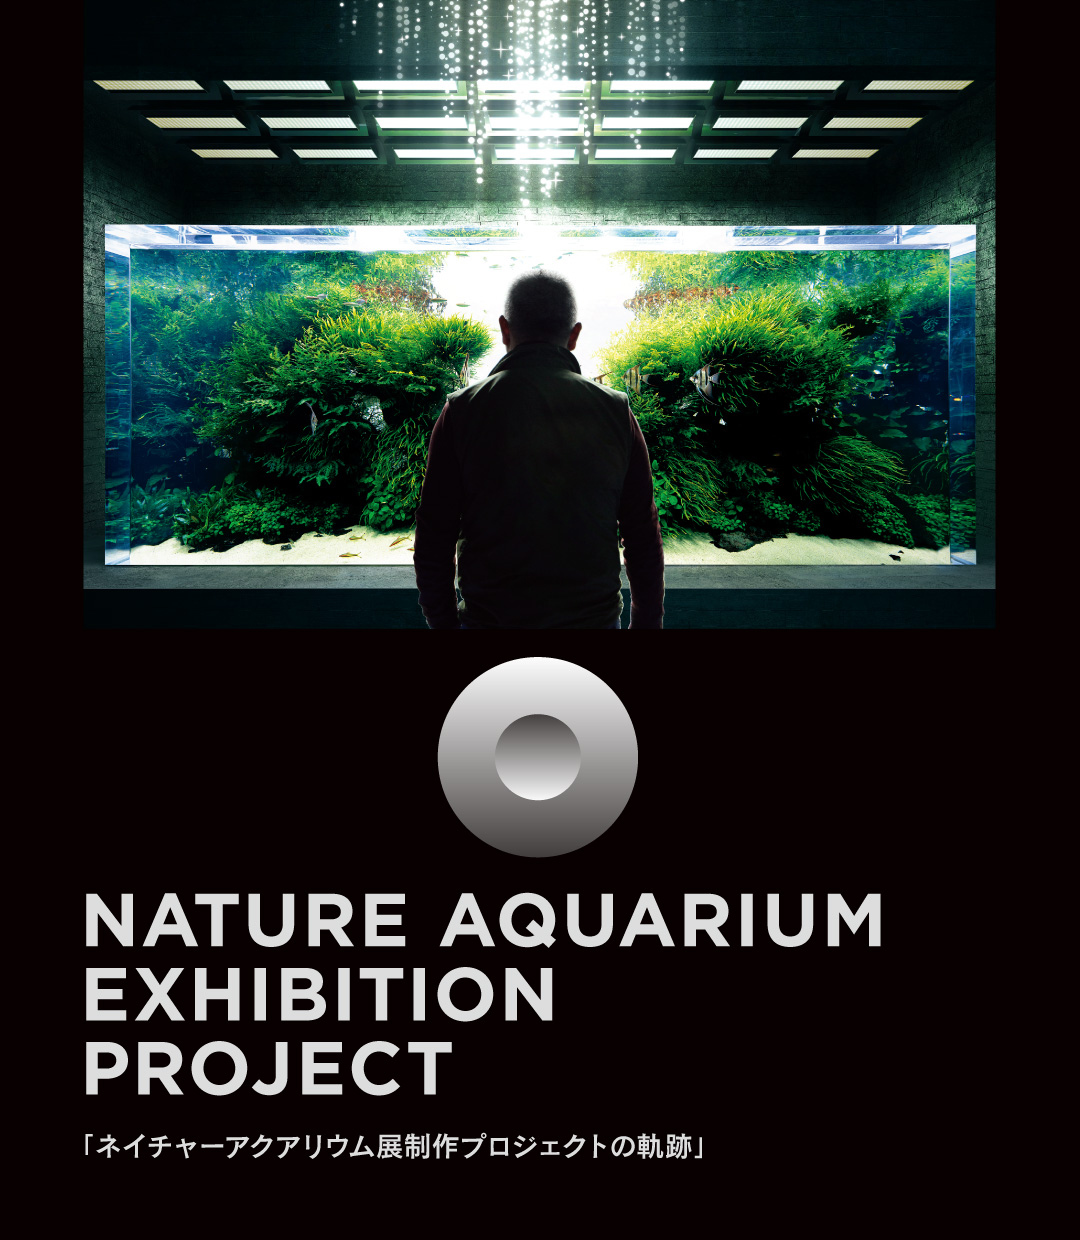 NATURE AQUARIUM EXHIBITION PROJECT  ‘Trajectory of Nature Aquarium Exhibition production project’